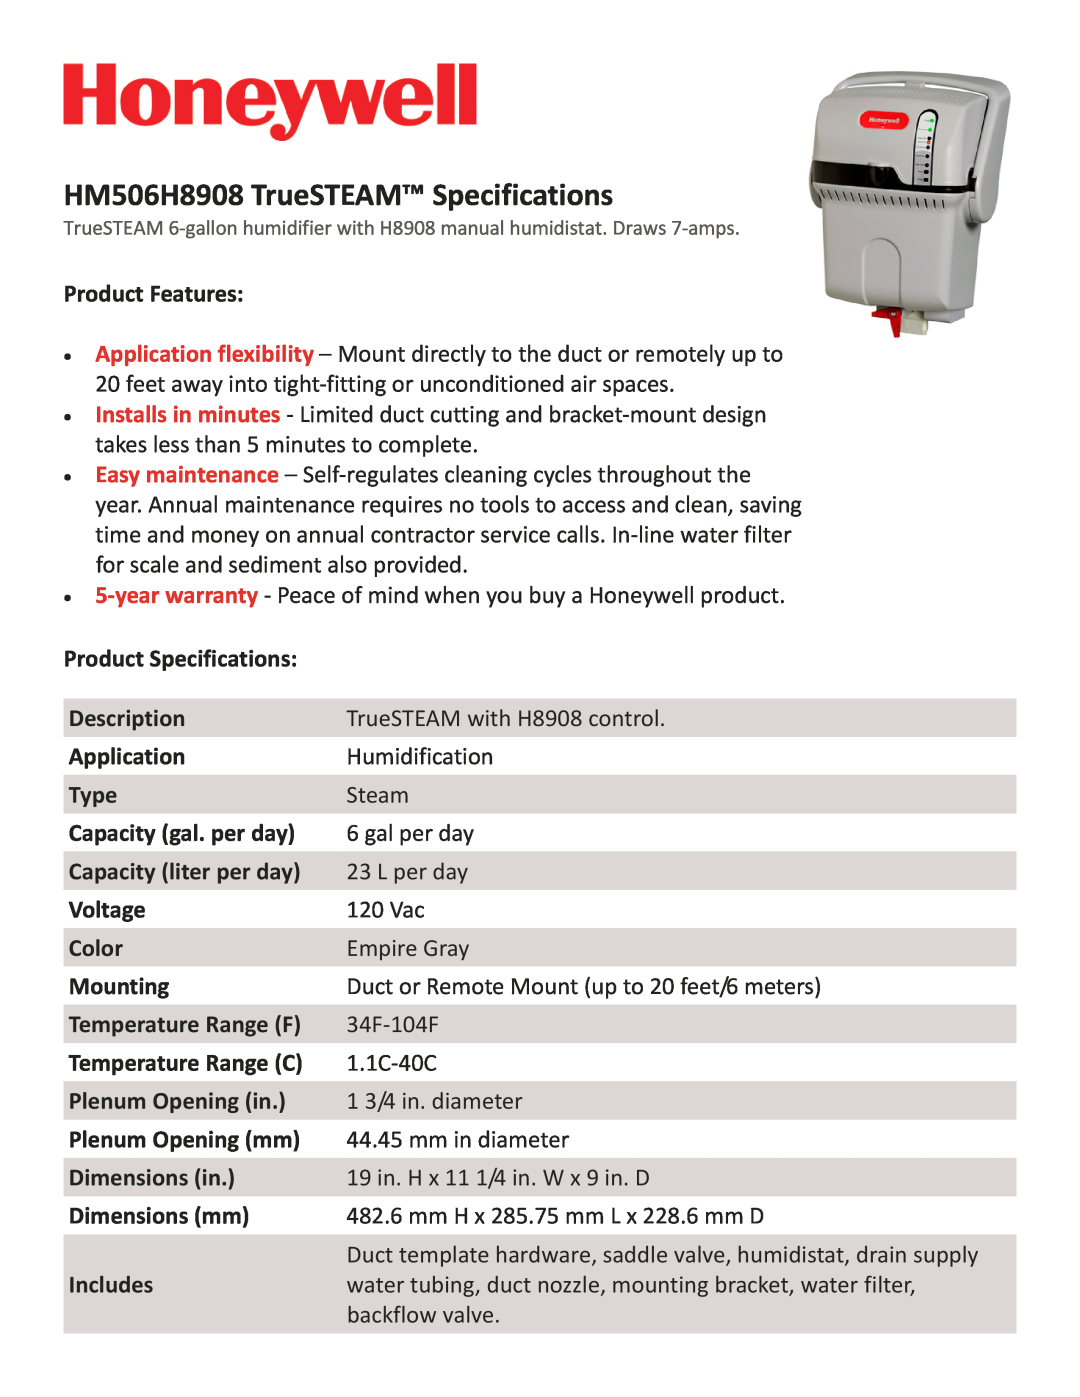 Honeywell specifications HM506H8908 TrueSTEAM Specifications 